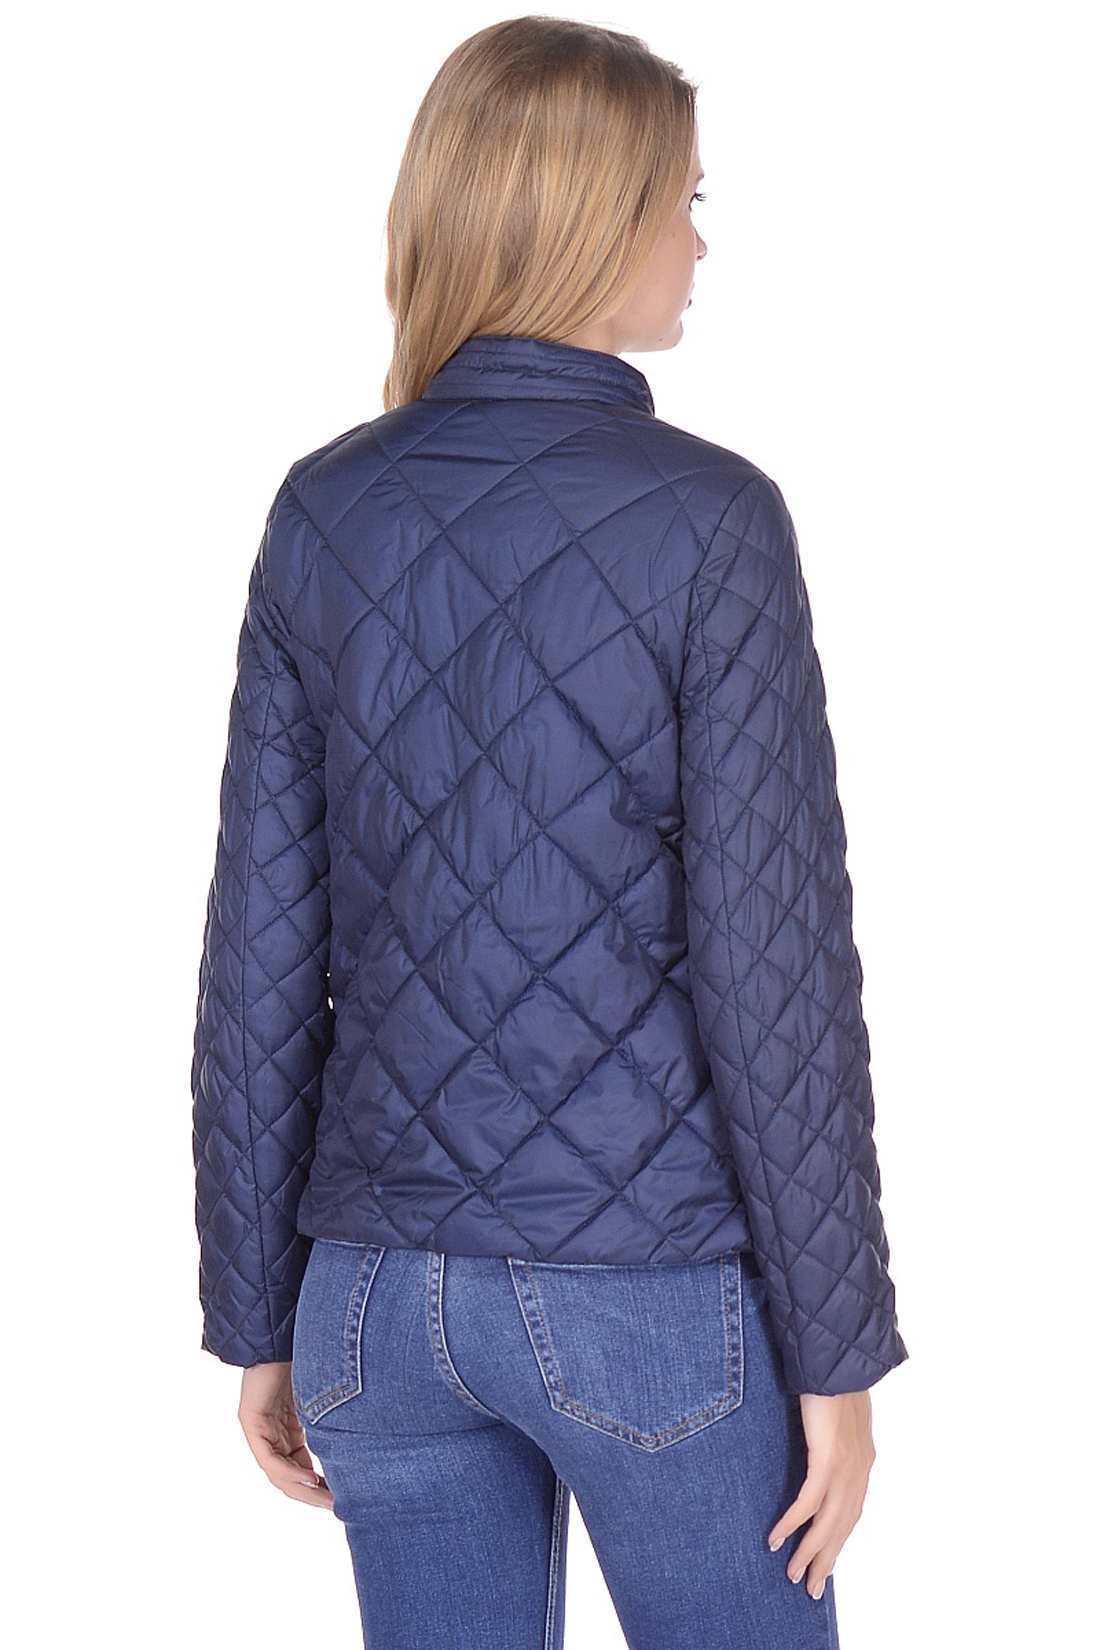 Куртка с простёжкой ромбами (арт. baon B038047), размер L, цвет синий Куртка с простёжкой ромбами (арт. baon B038047) - фото 2